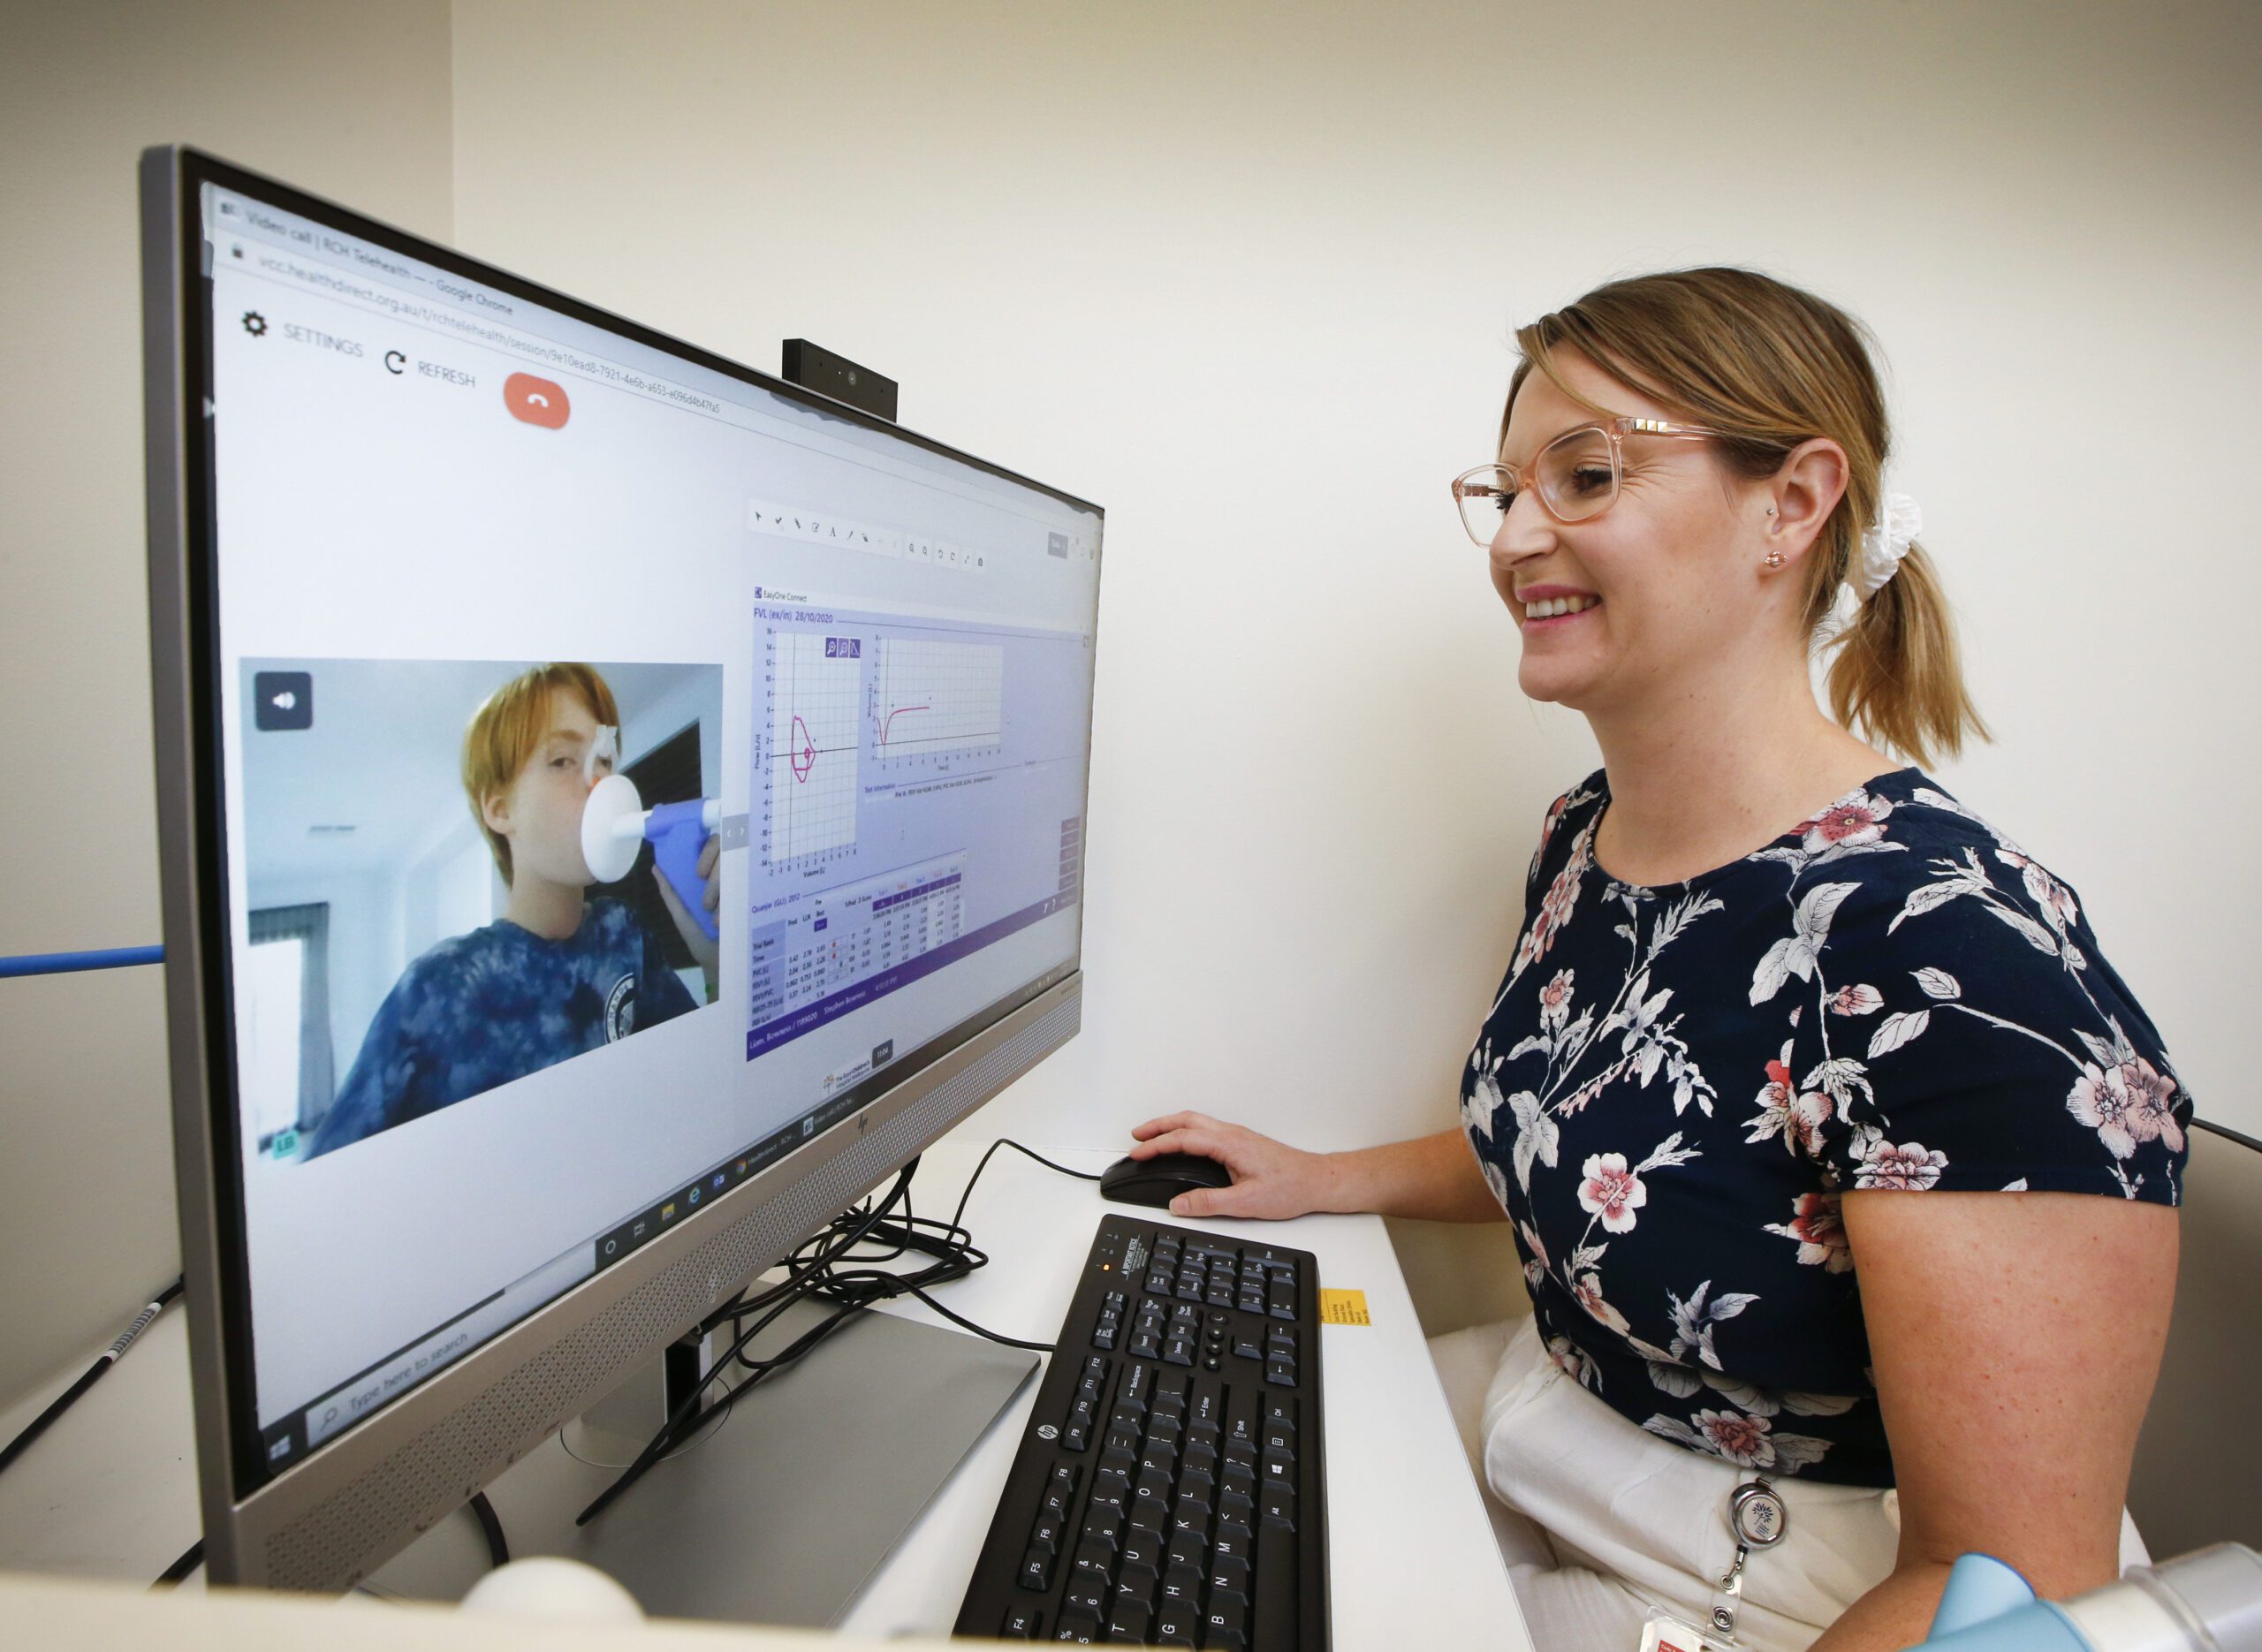 Respiratory scientist monitoring patients through laptop